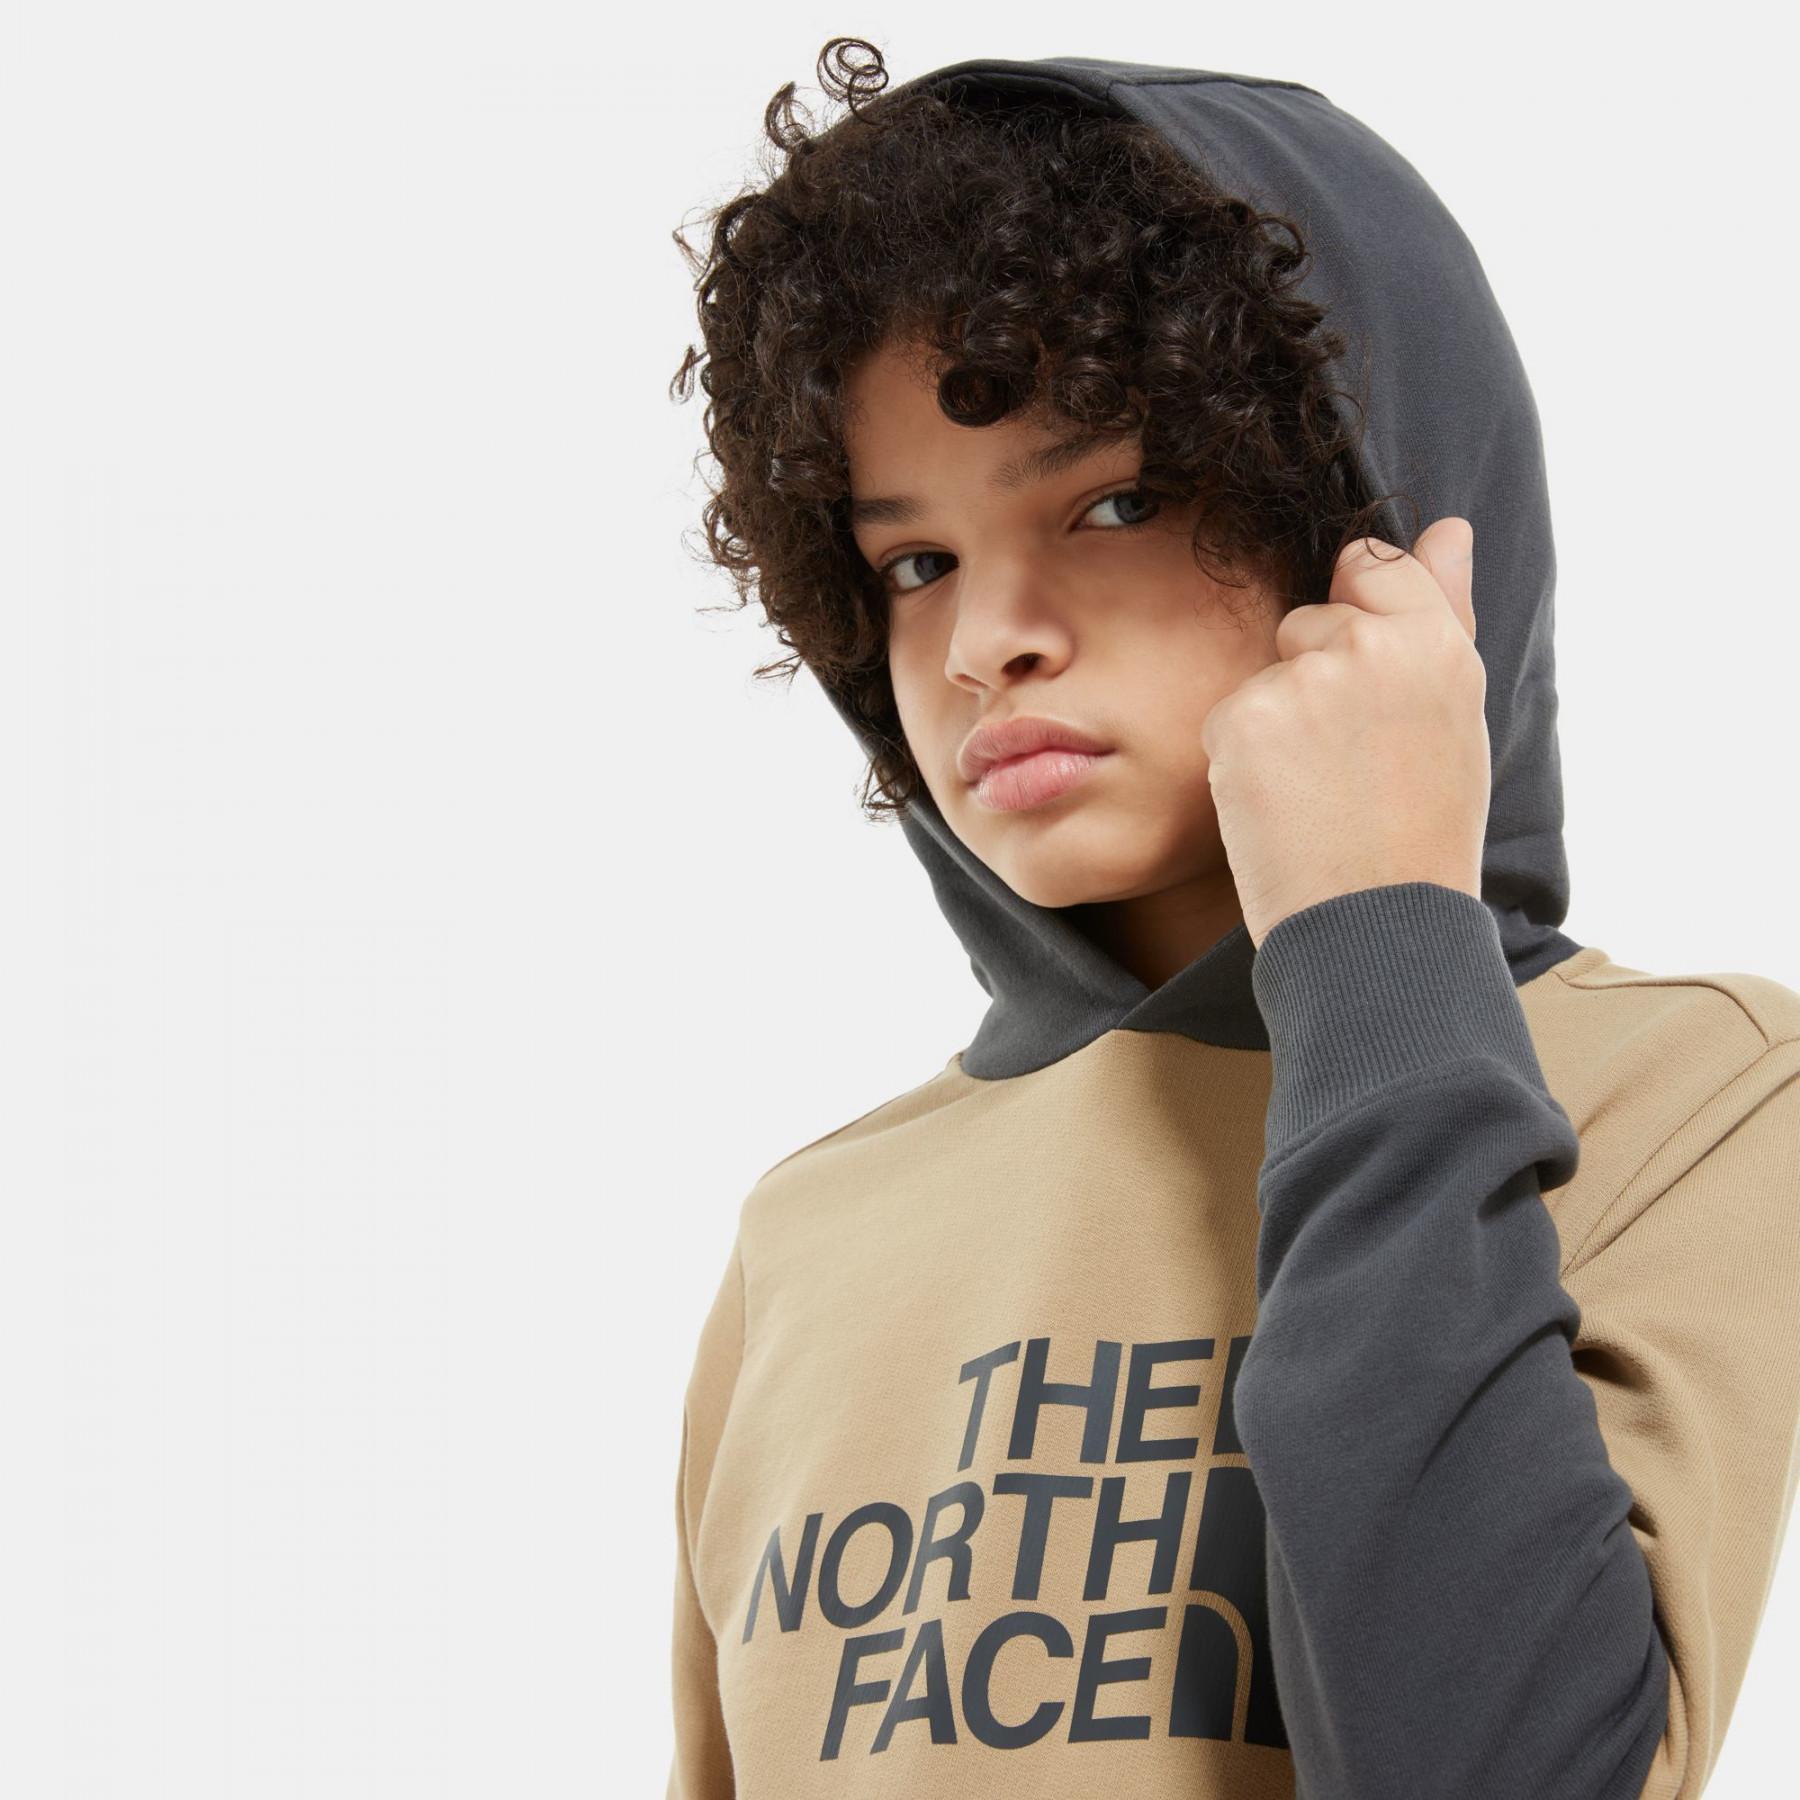 Kinder sweatshirt The North Face Color-block